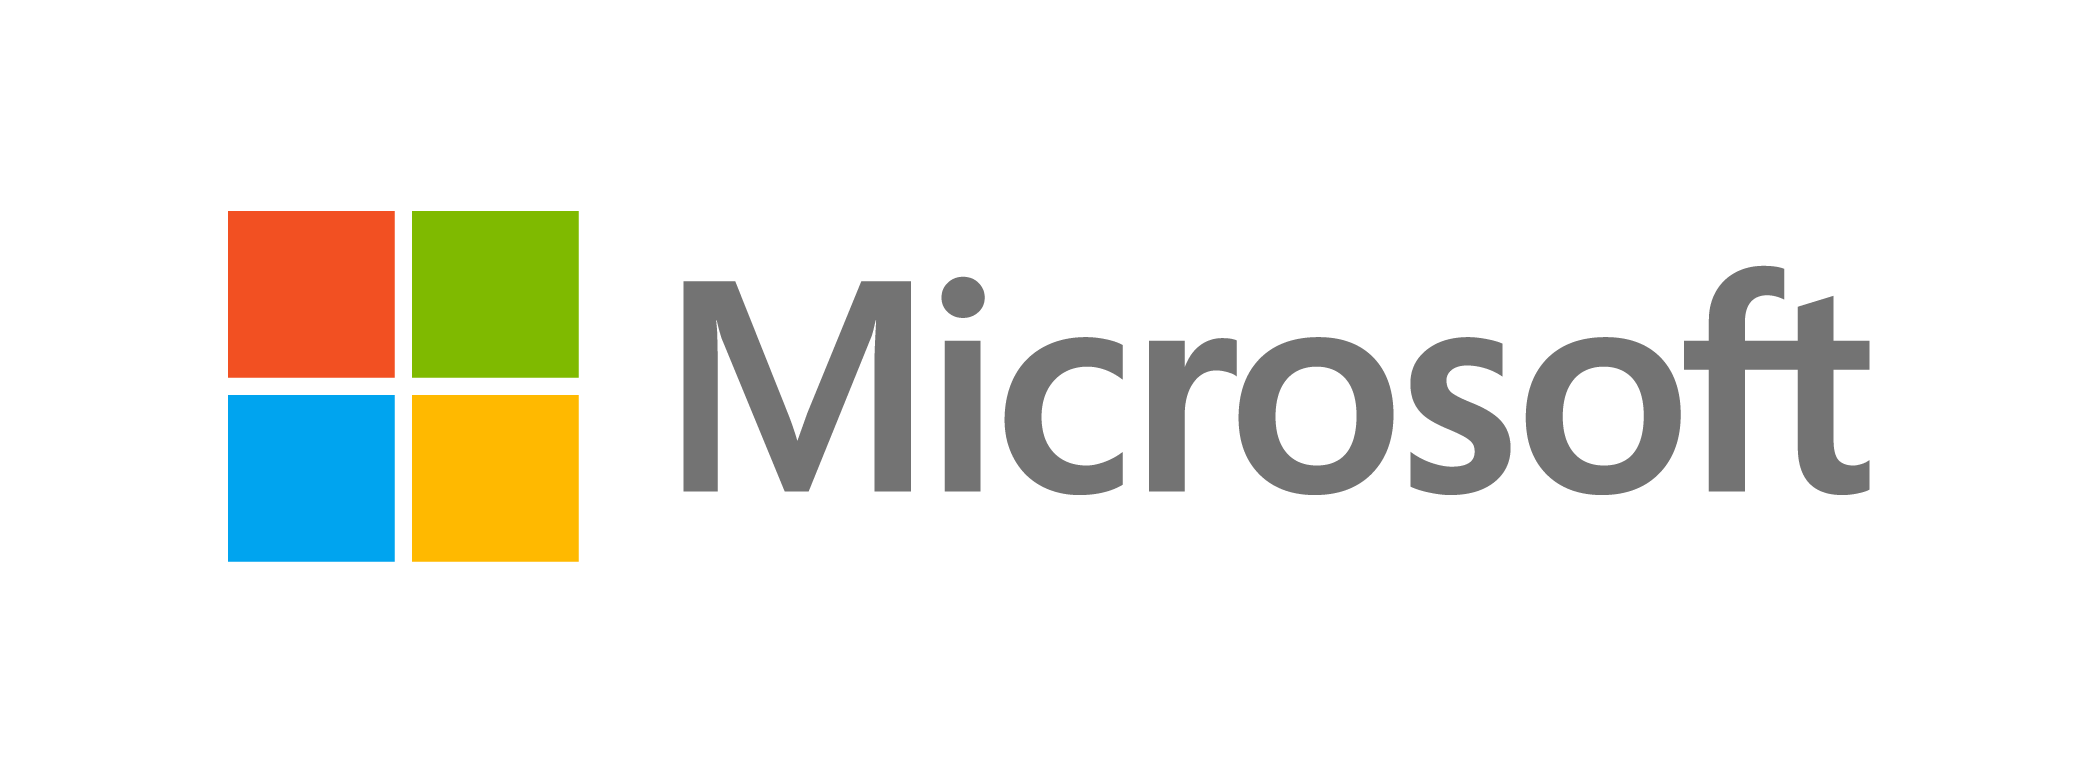 Download Microsoft Logo Transparent Background Hq Png Image